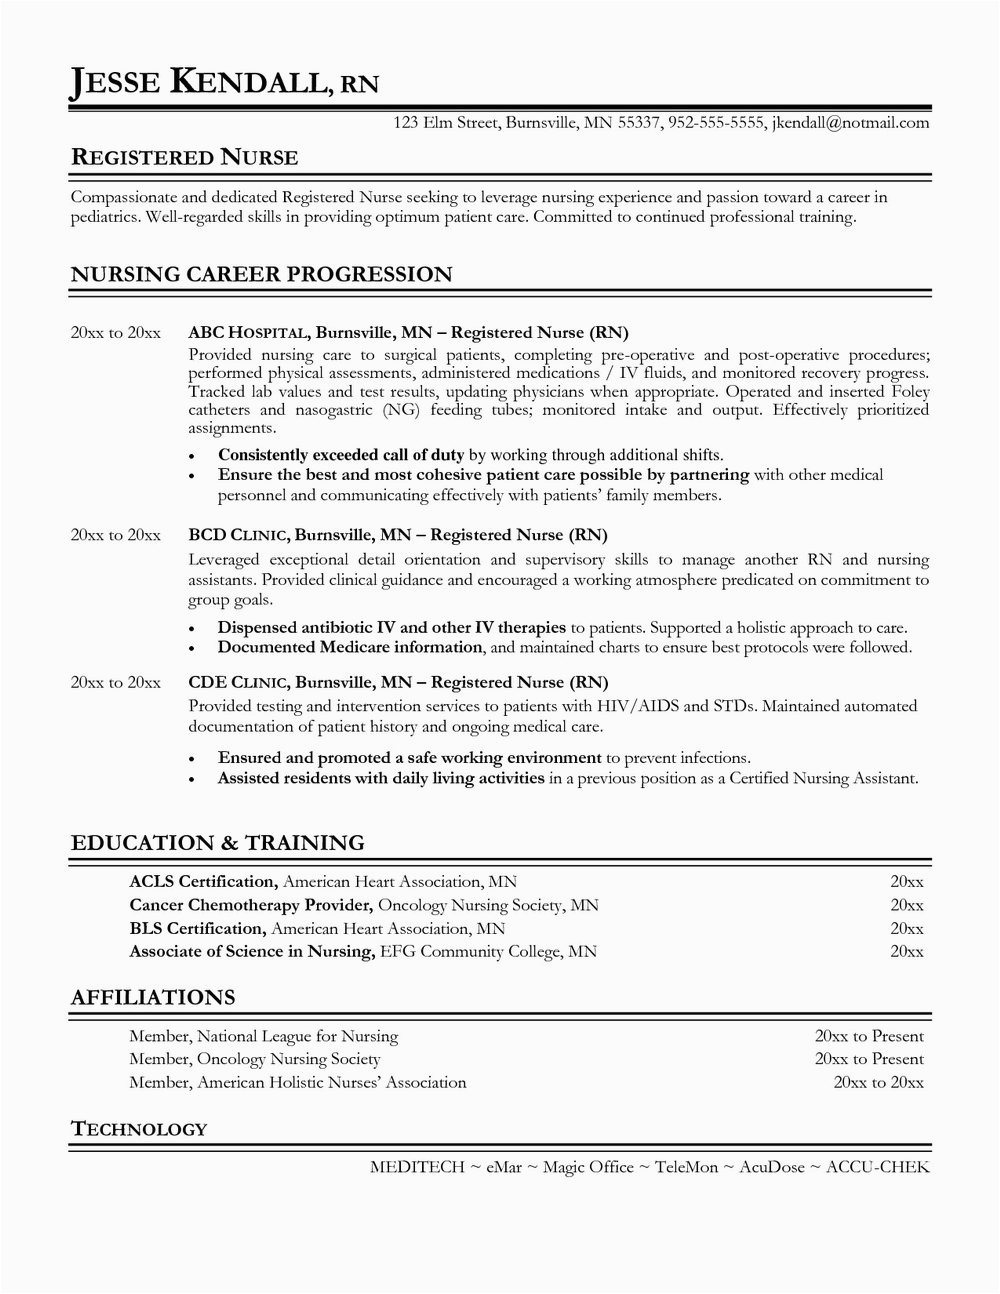 Sample Functional Resume for Registered Nurse Cv Template for Registered Nurse